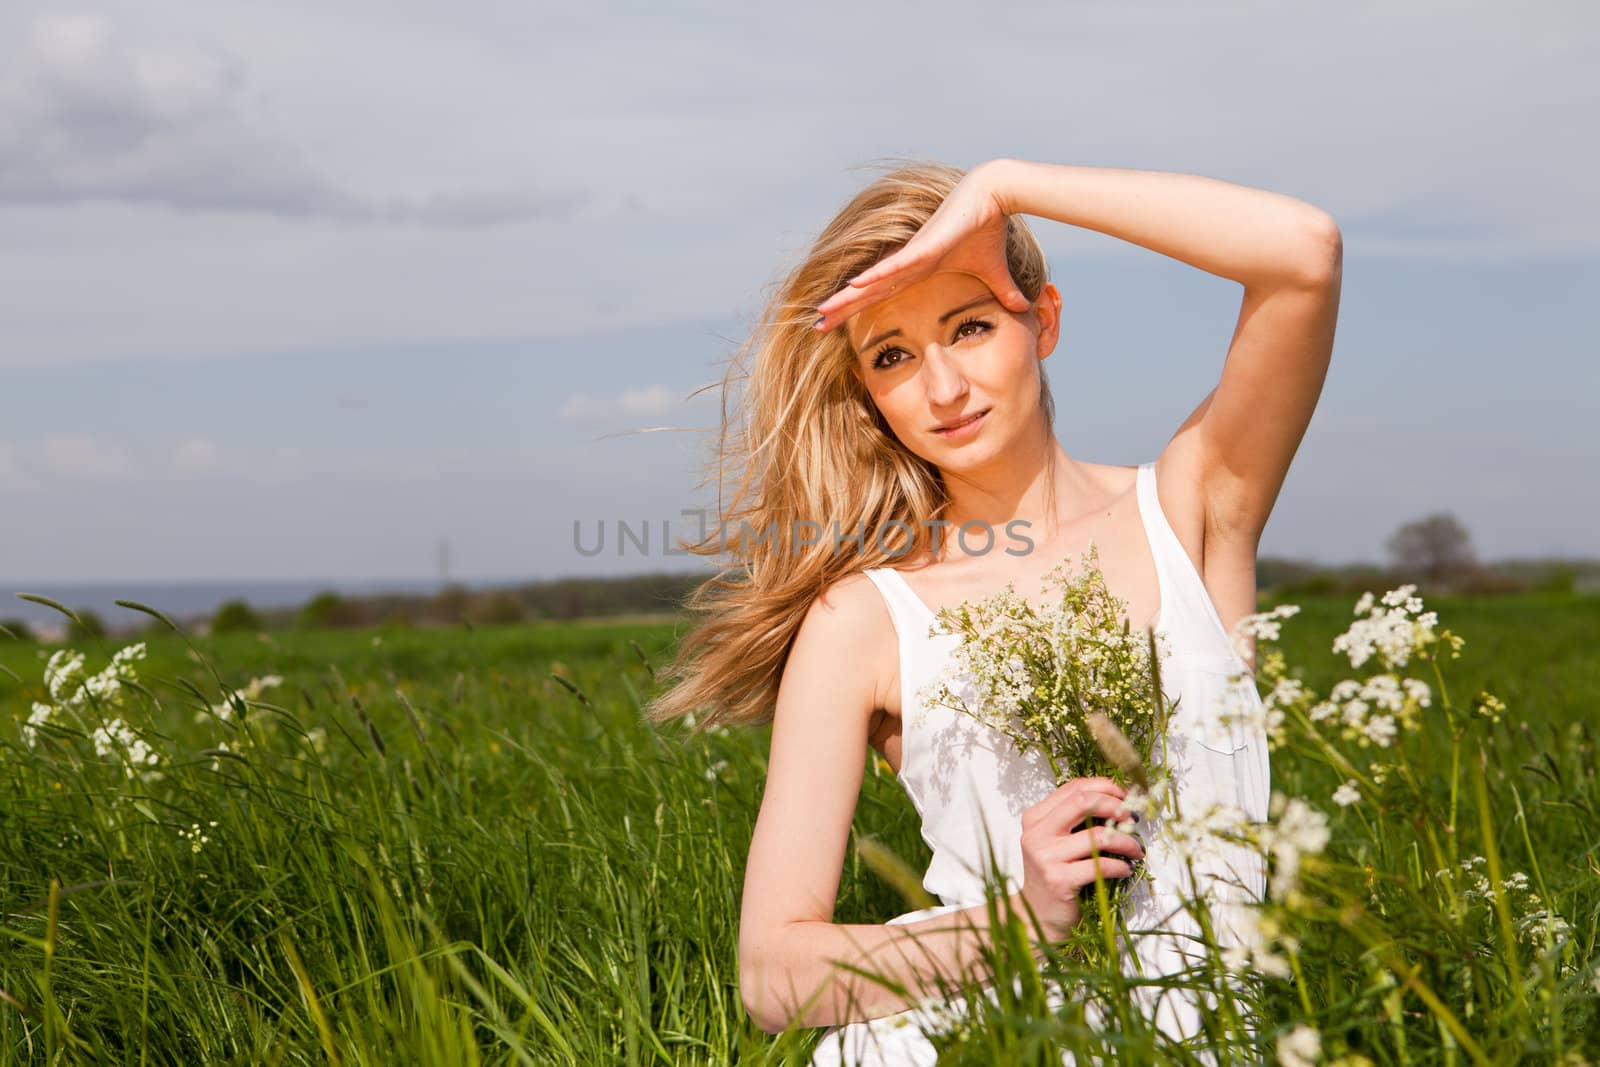 beautiful blonde woman outdoor in summer happy by juniart